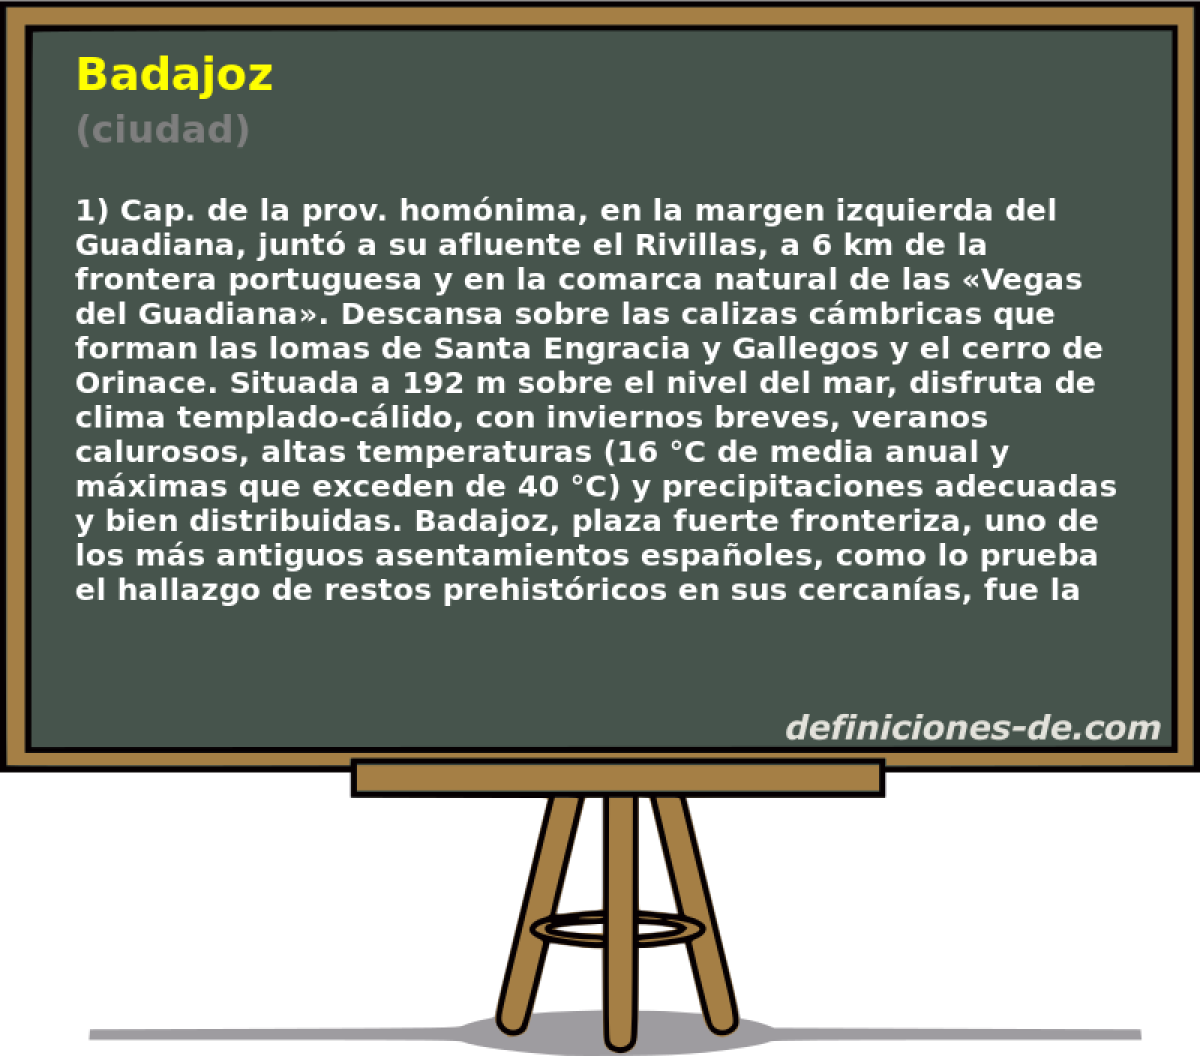 Badajoz (ciudad)